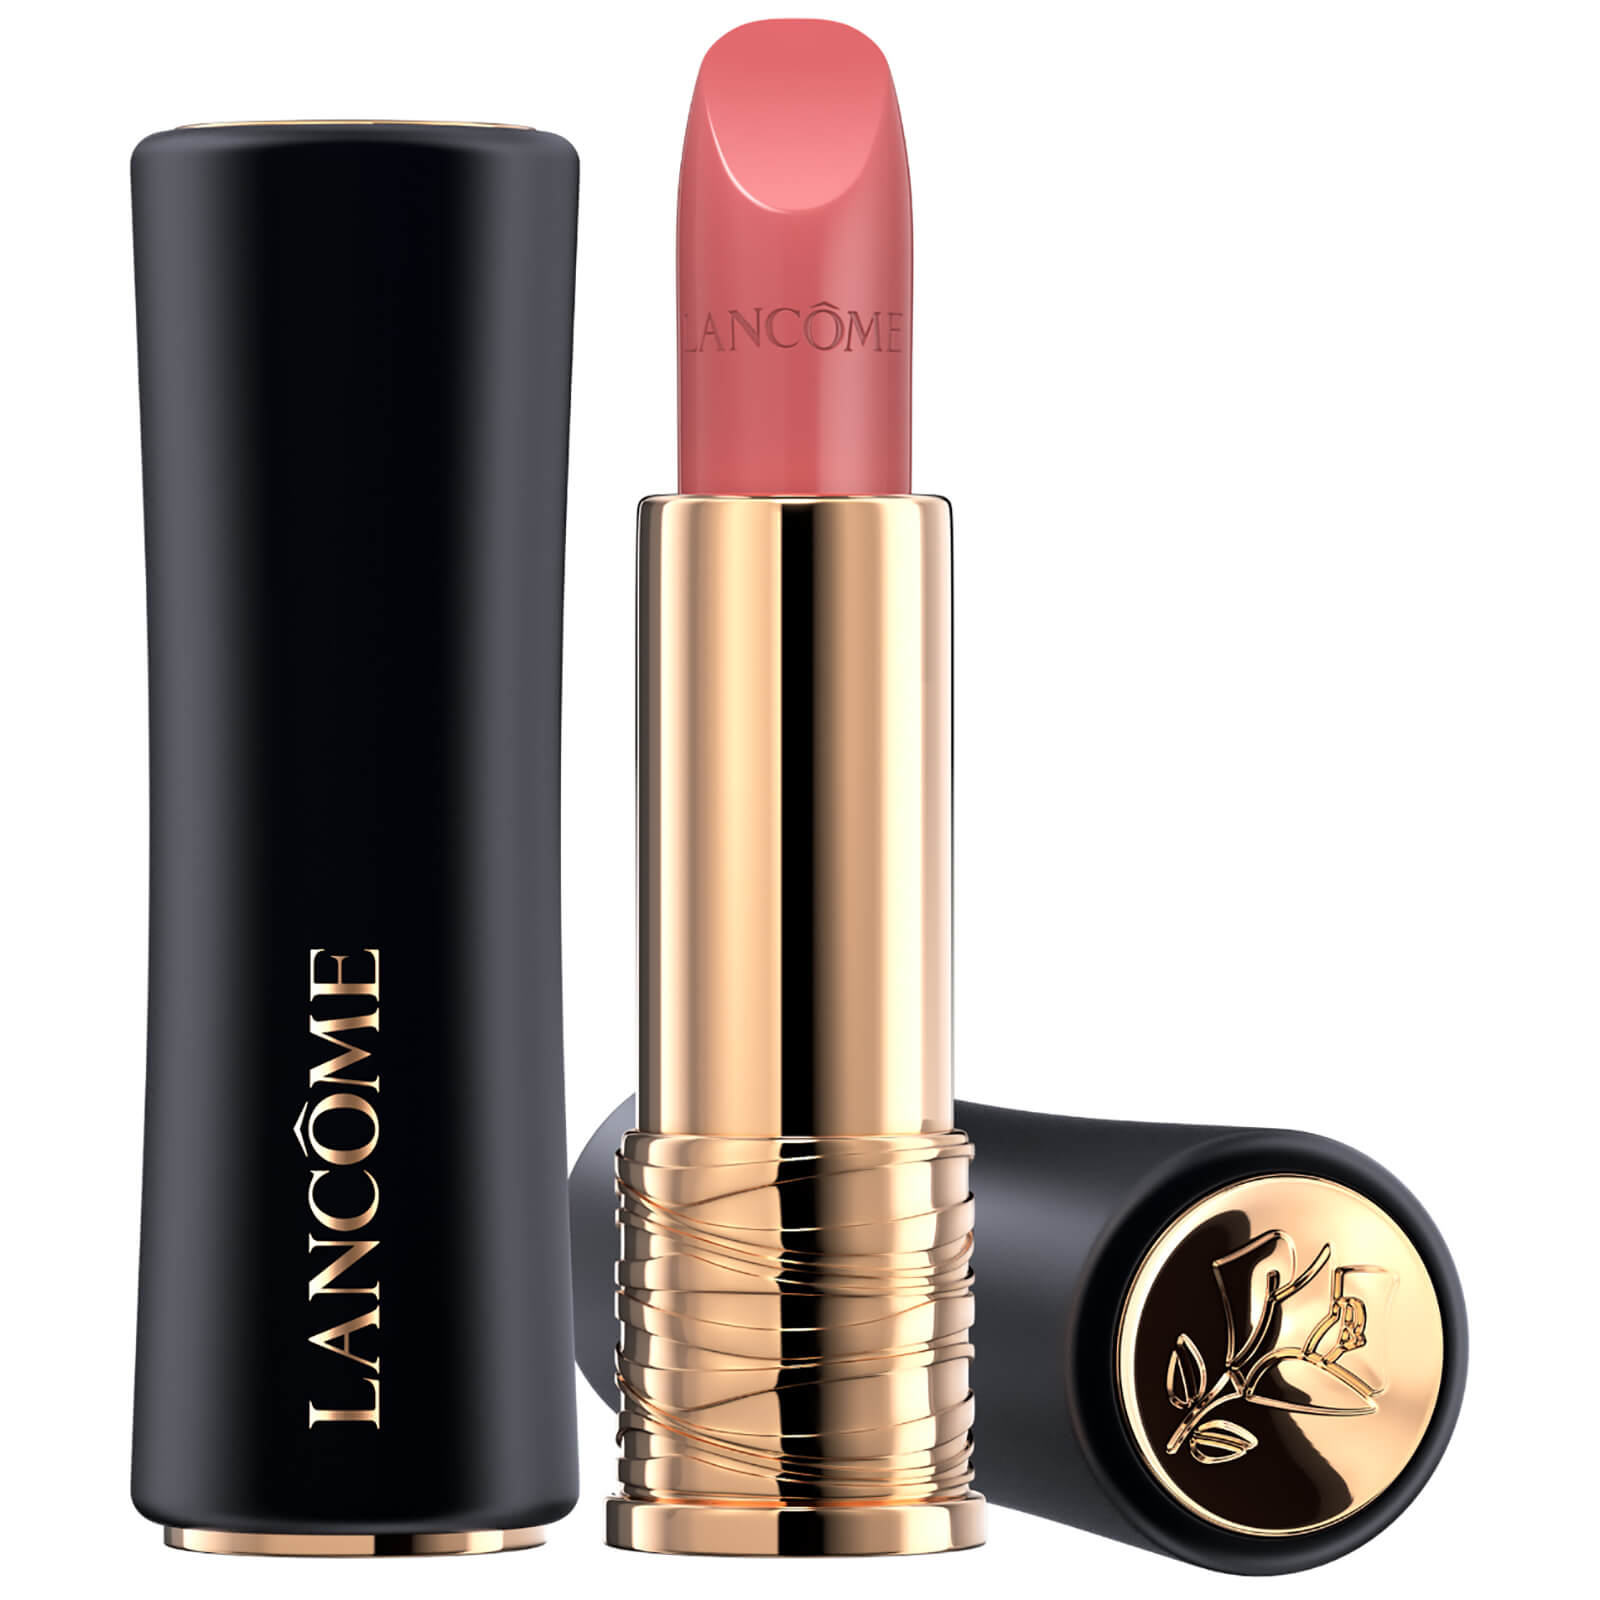 Lancôme L'Absolu Rouge Cream Lipstick 35ml (Verschiedene Farbtöne) - 276 Timeless Romance